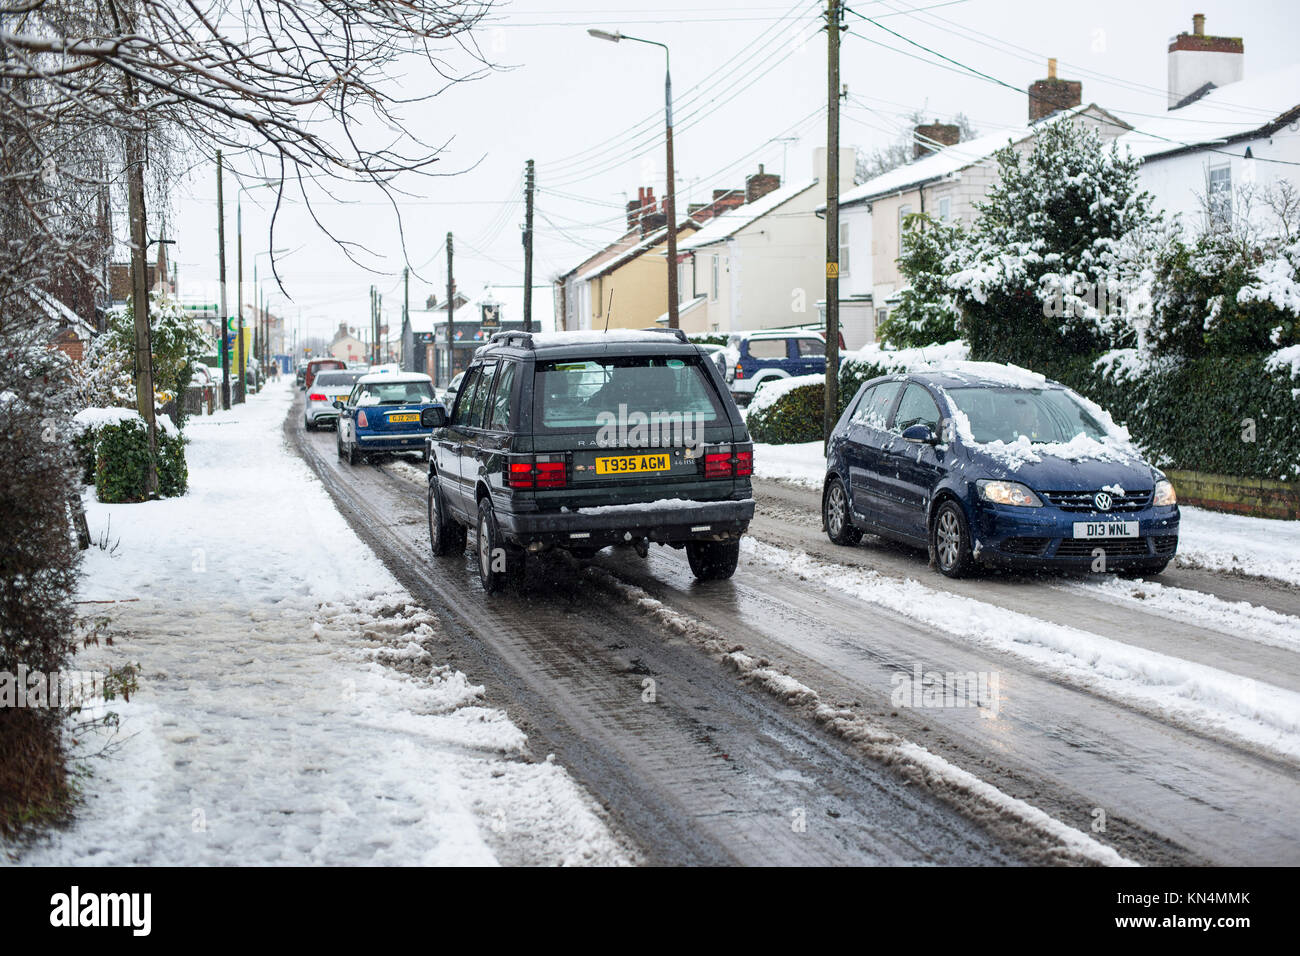 Heavy snowfall causing traffic problems in Braintree, Essex - December 2017 Stock Photo